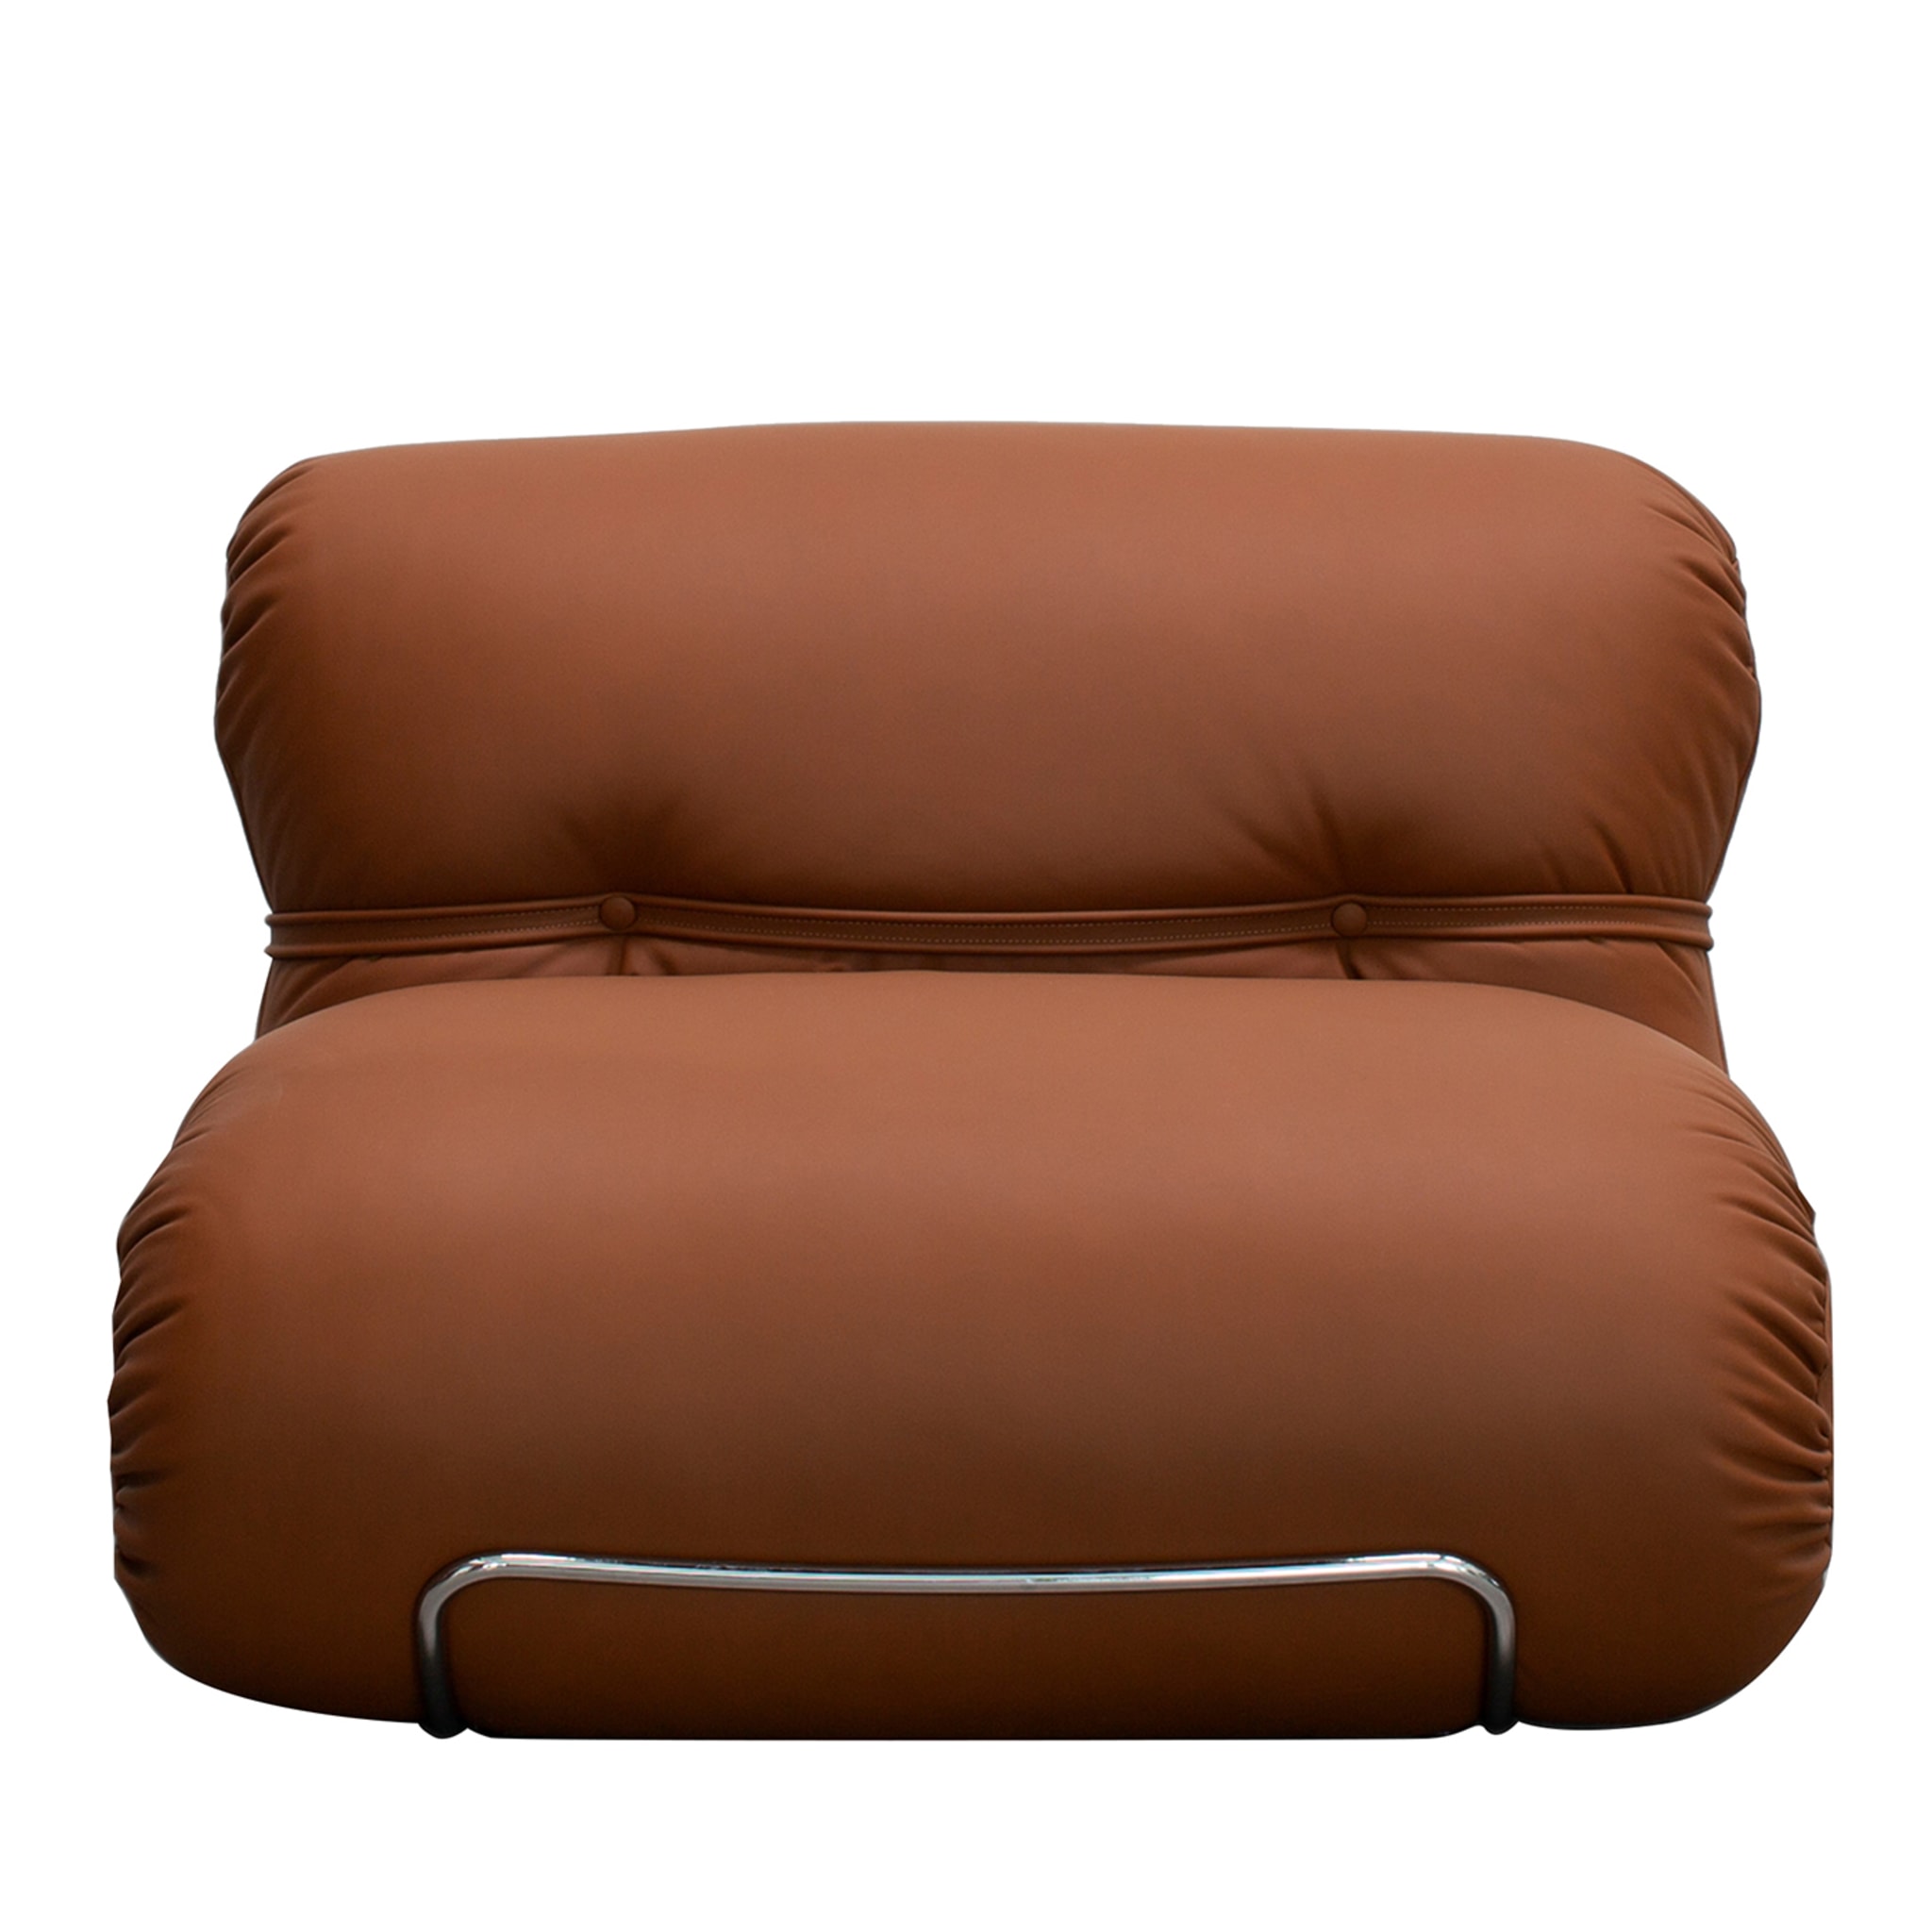 Orsola Brown Lounge Chair by Gastone Rinaldi - Main view